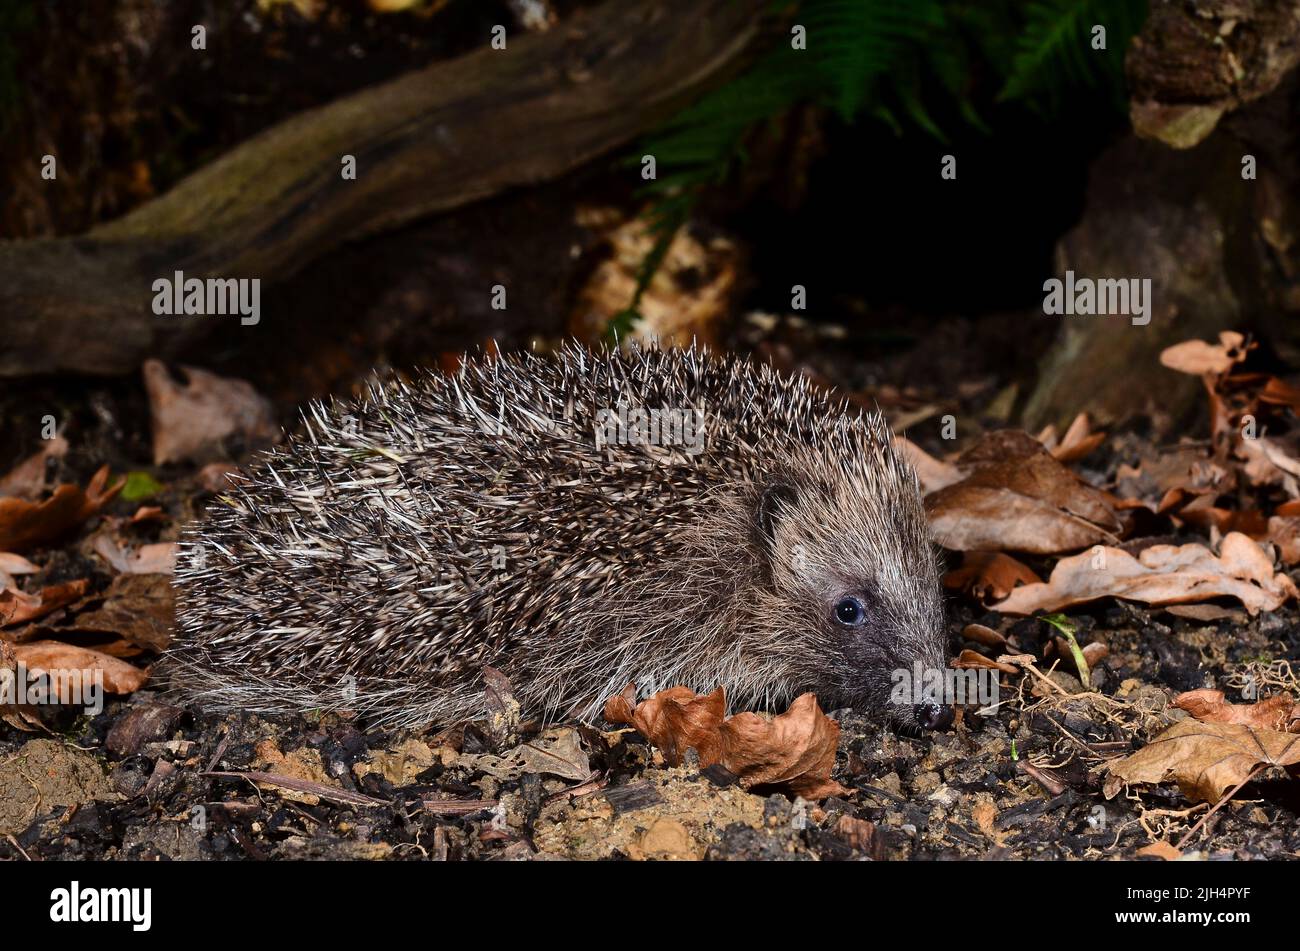 Adult hedgehog foraging in leaf litter in autumn. Dorset, UK Stock Photo